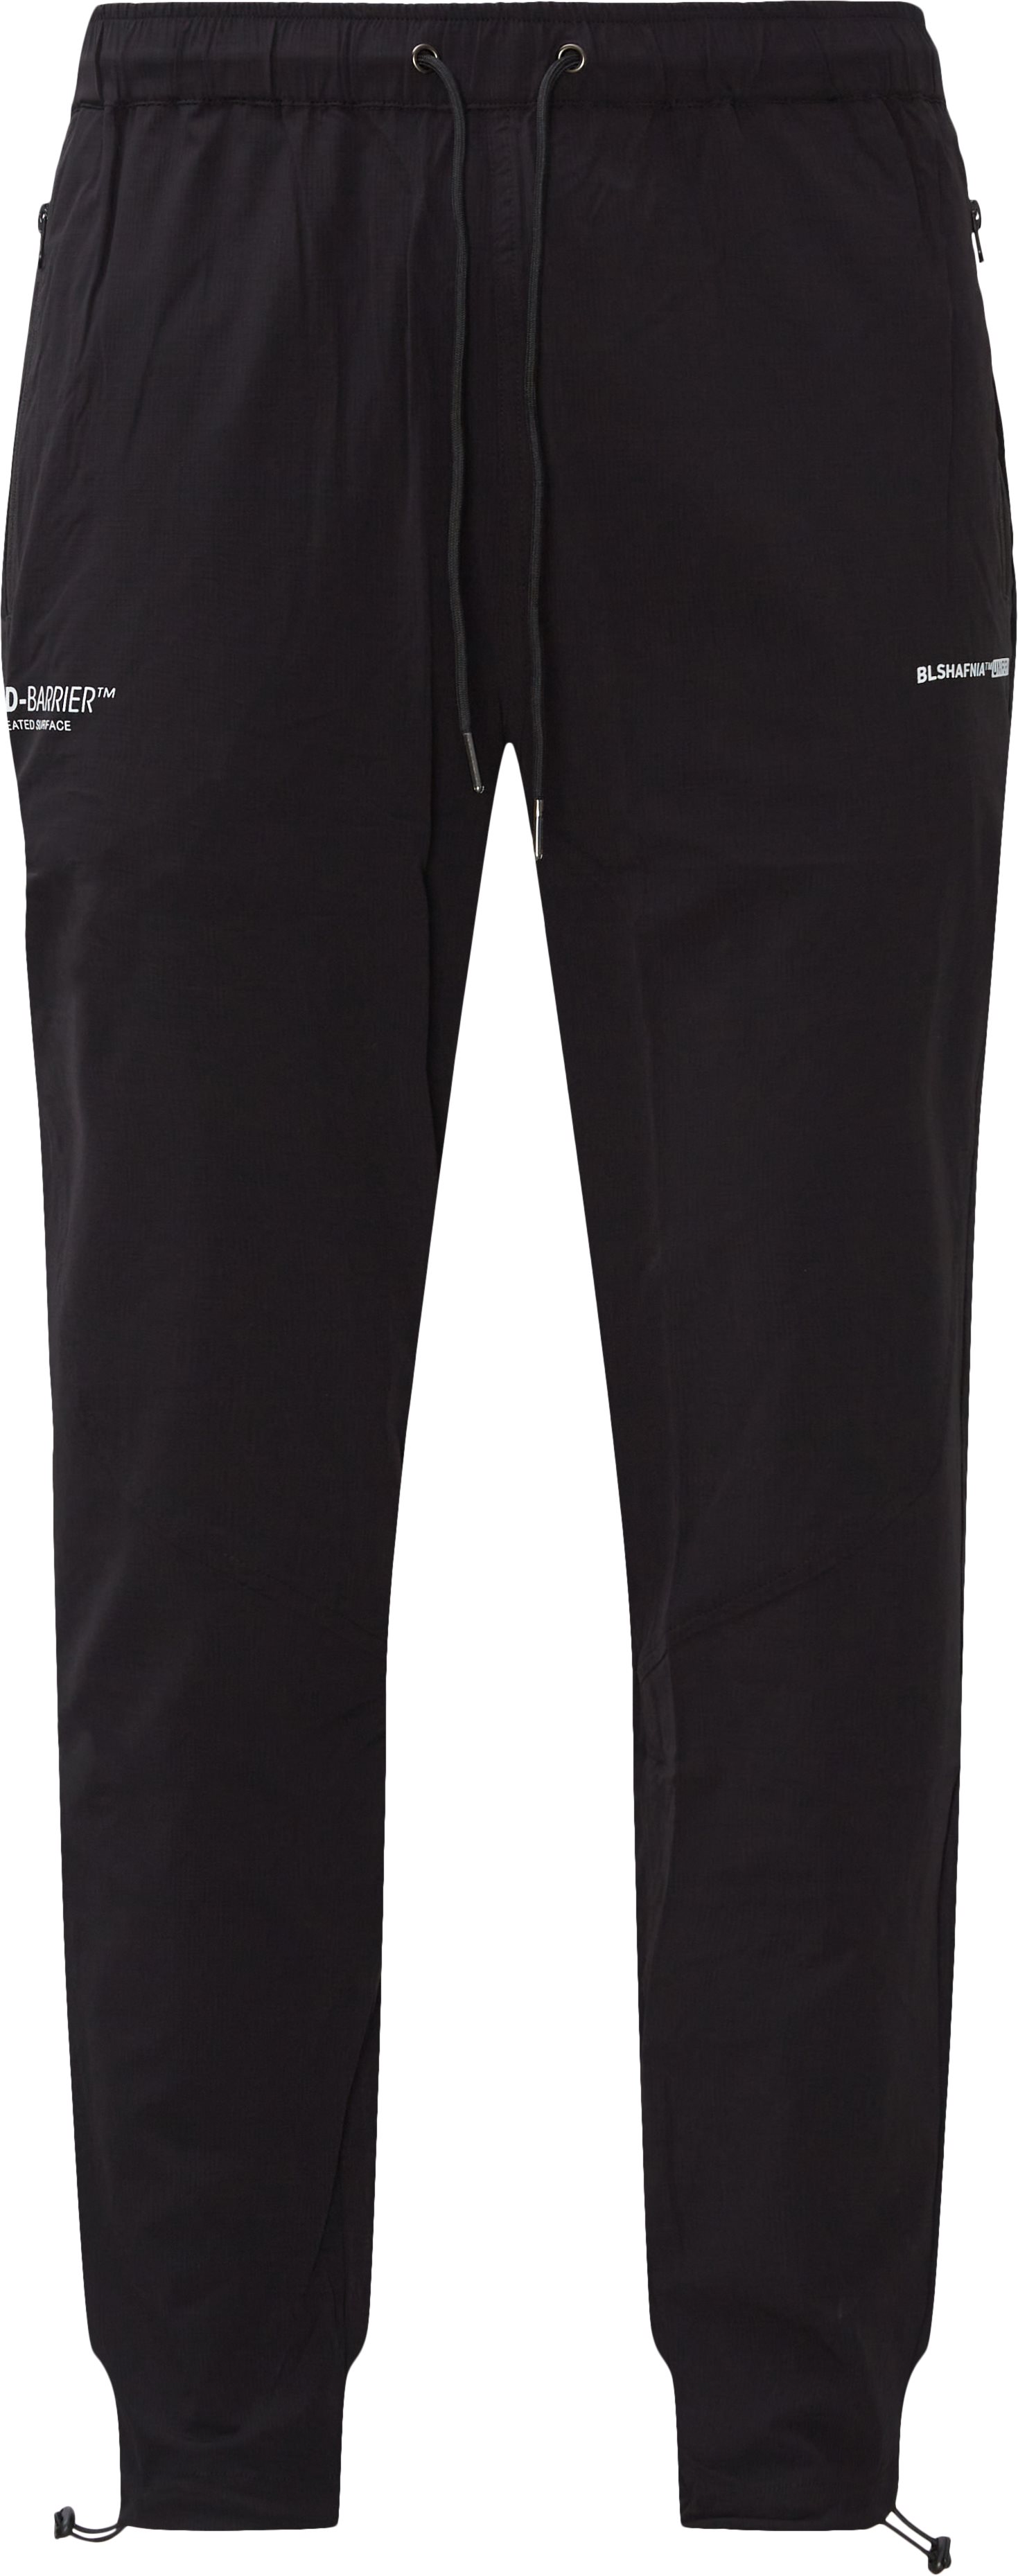 Tompkins Trackpants - Trousers - Regular fit - Black